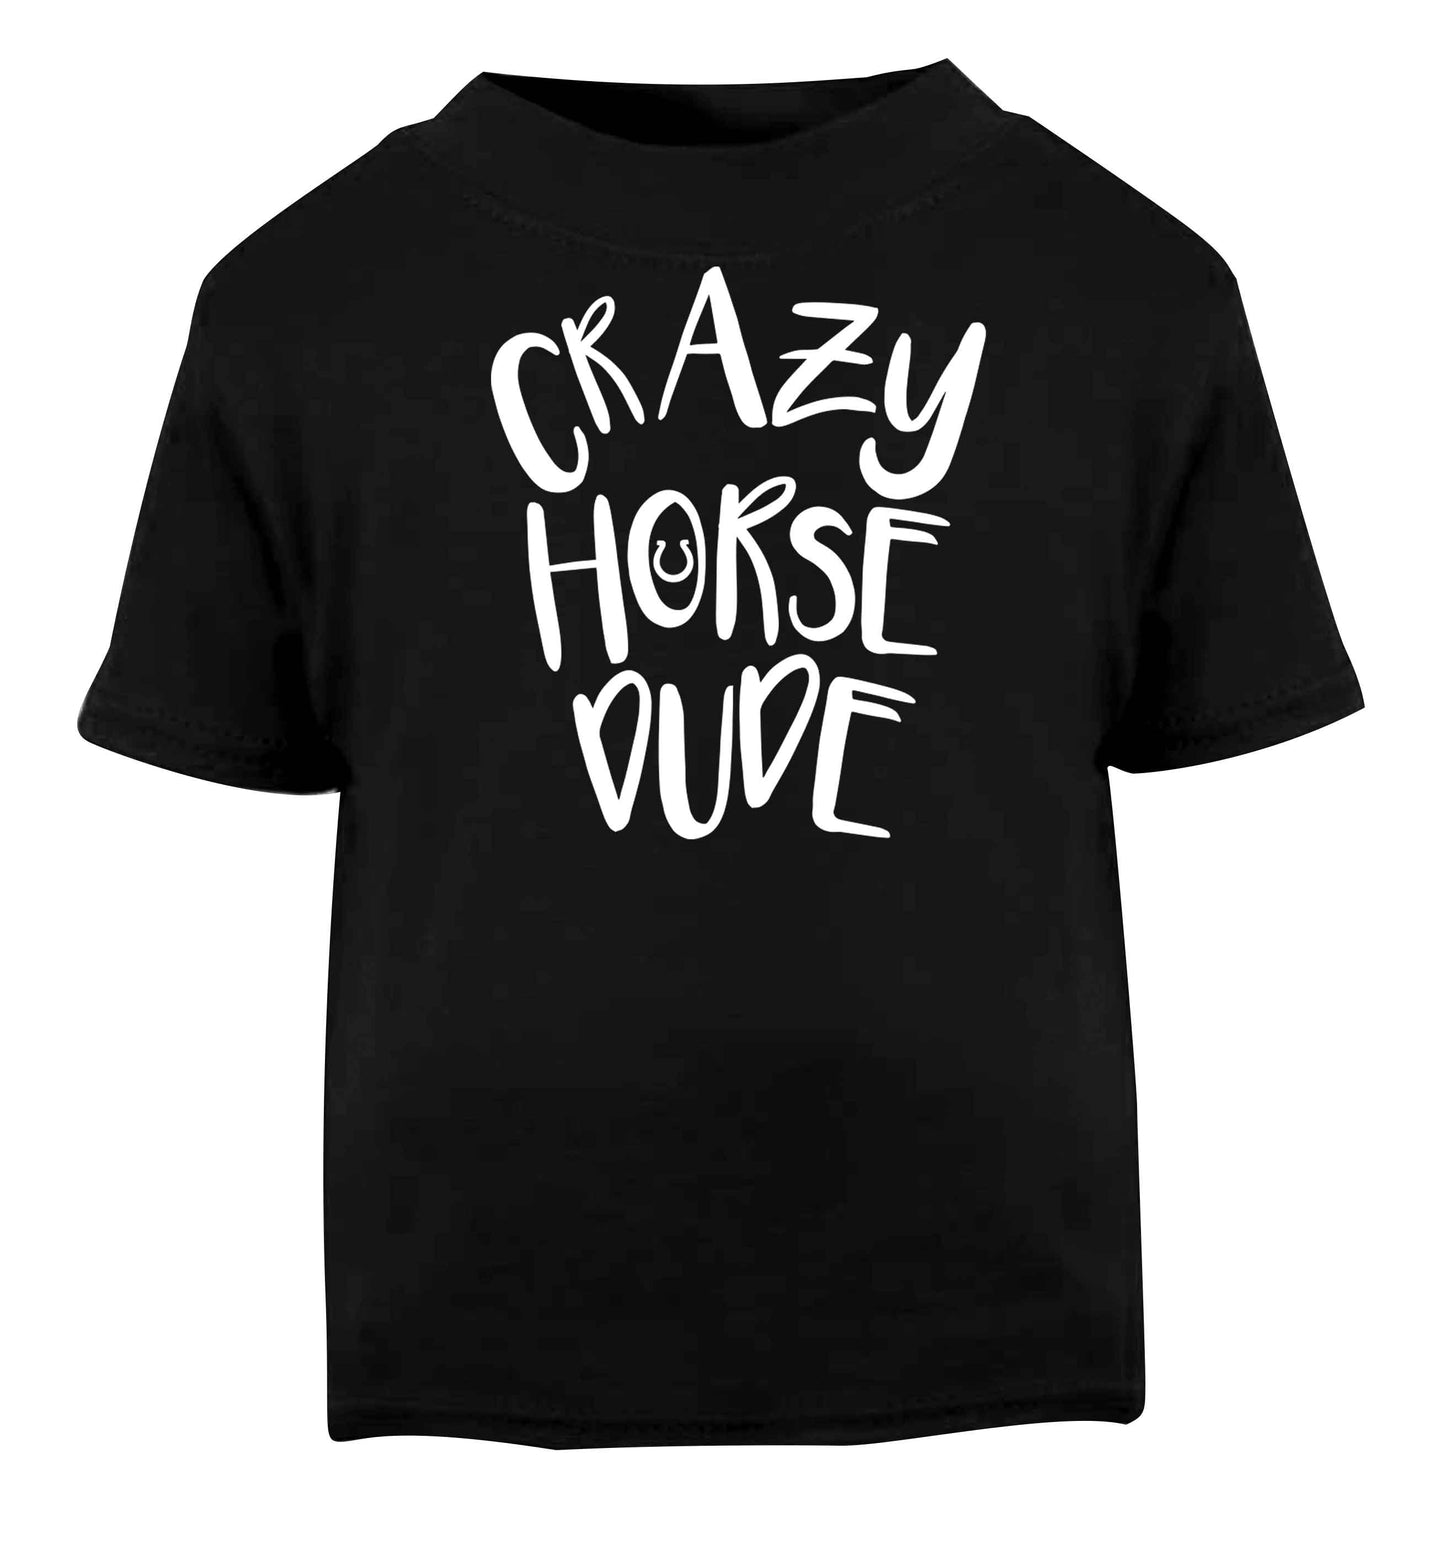 Crazy horse dude Black baby toddler Tshirt 2 years